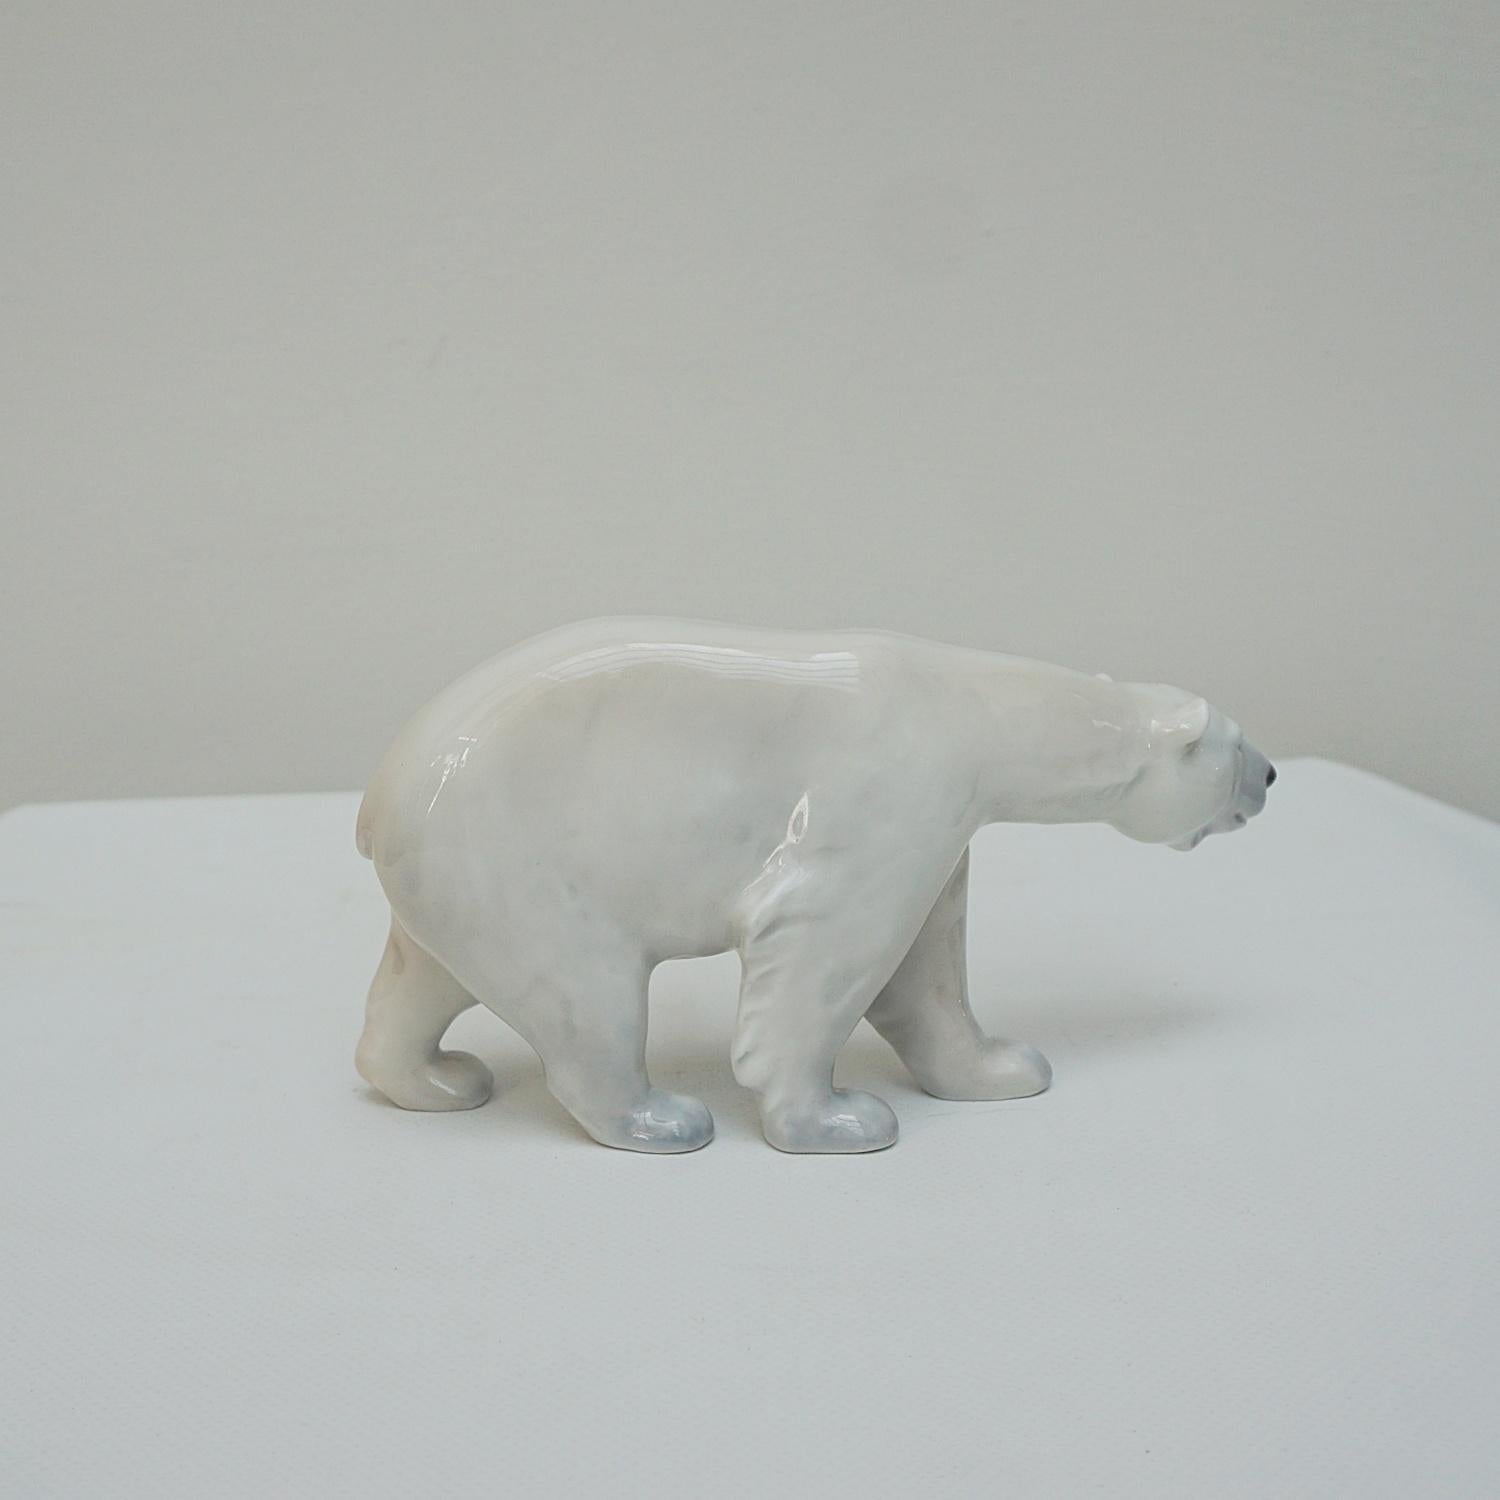 Royal Copenhagen Walking Polar Bear Figurine, 1st assortment, no. 320. Designed by Carl Johan Bonnesen.

Dimensions: H 10cm W 4cm D 19cm

Origin: Denmark

Date: 1900

Item Number: 1006232.